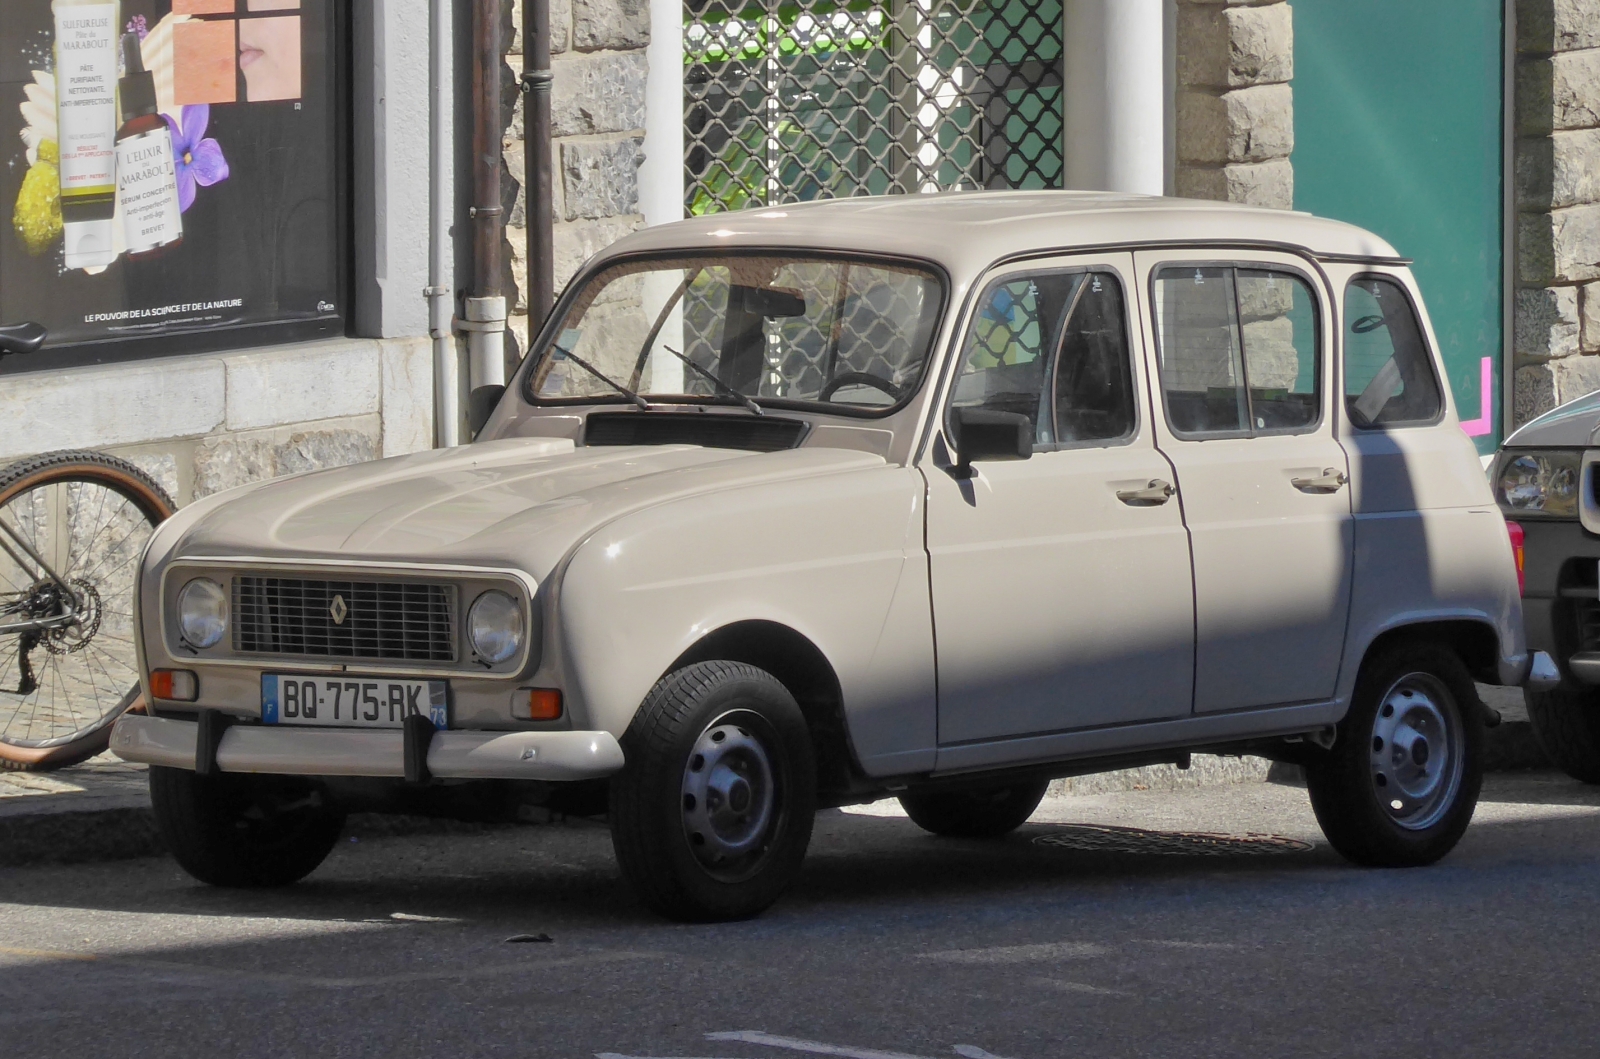 Renault R4 stand am Straßenrand.  09.2022